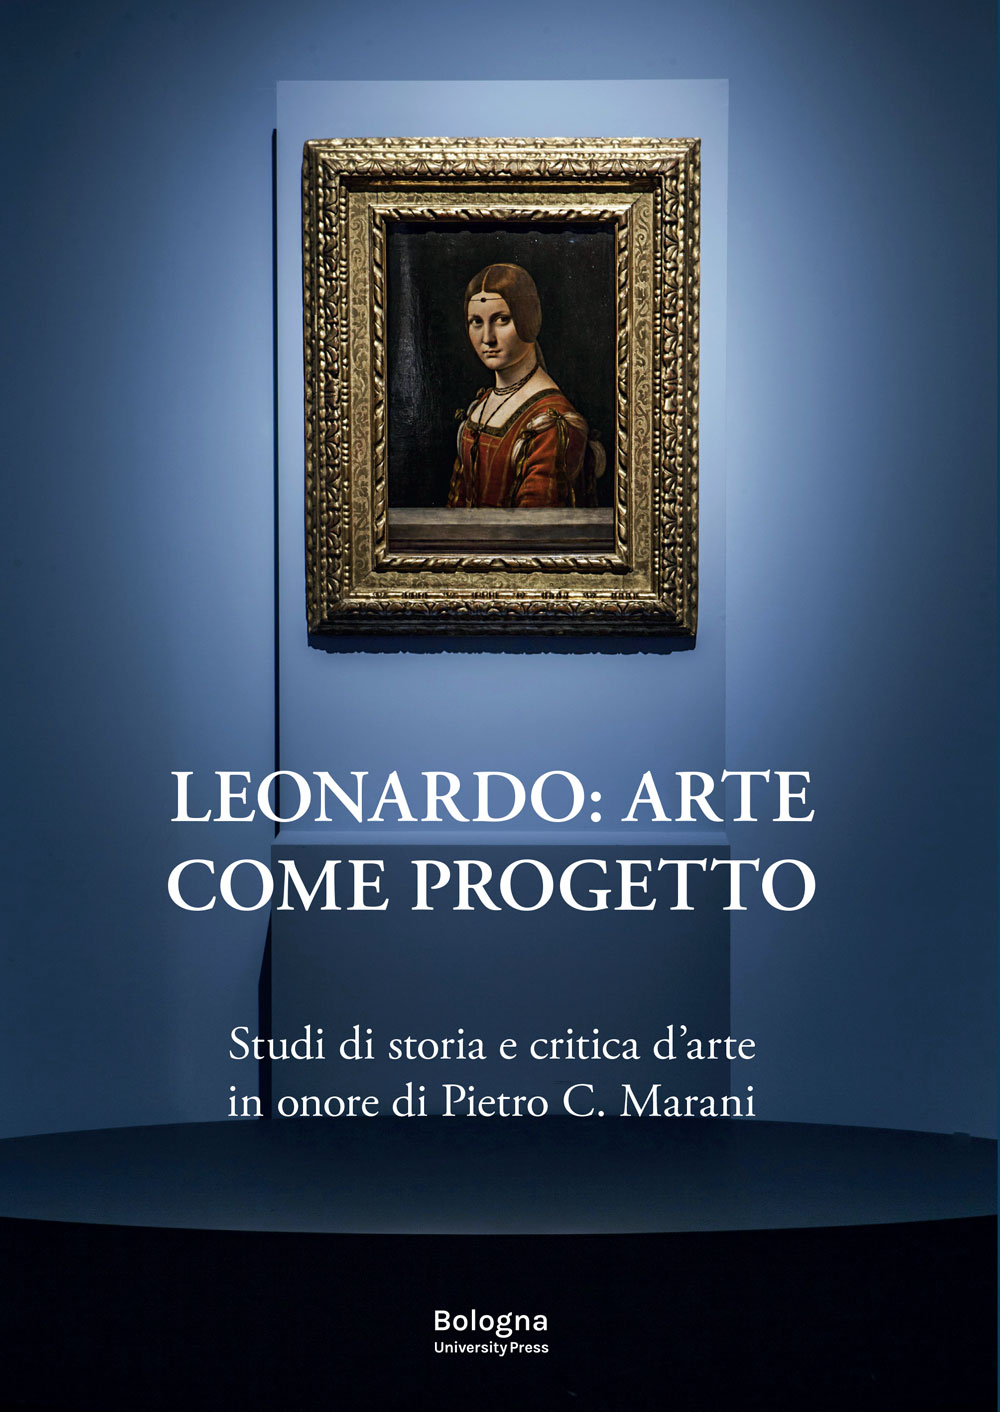 Leonardo: arte come progetto - Bologna University Press